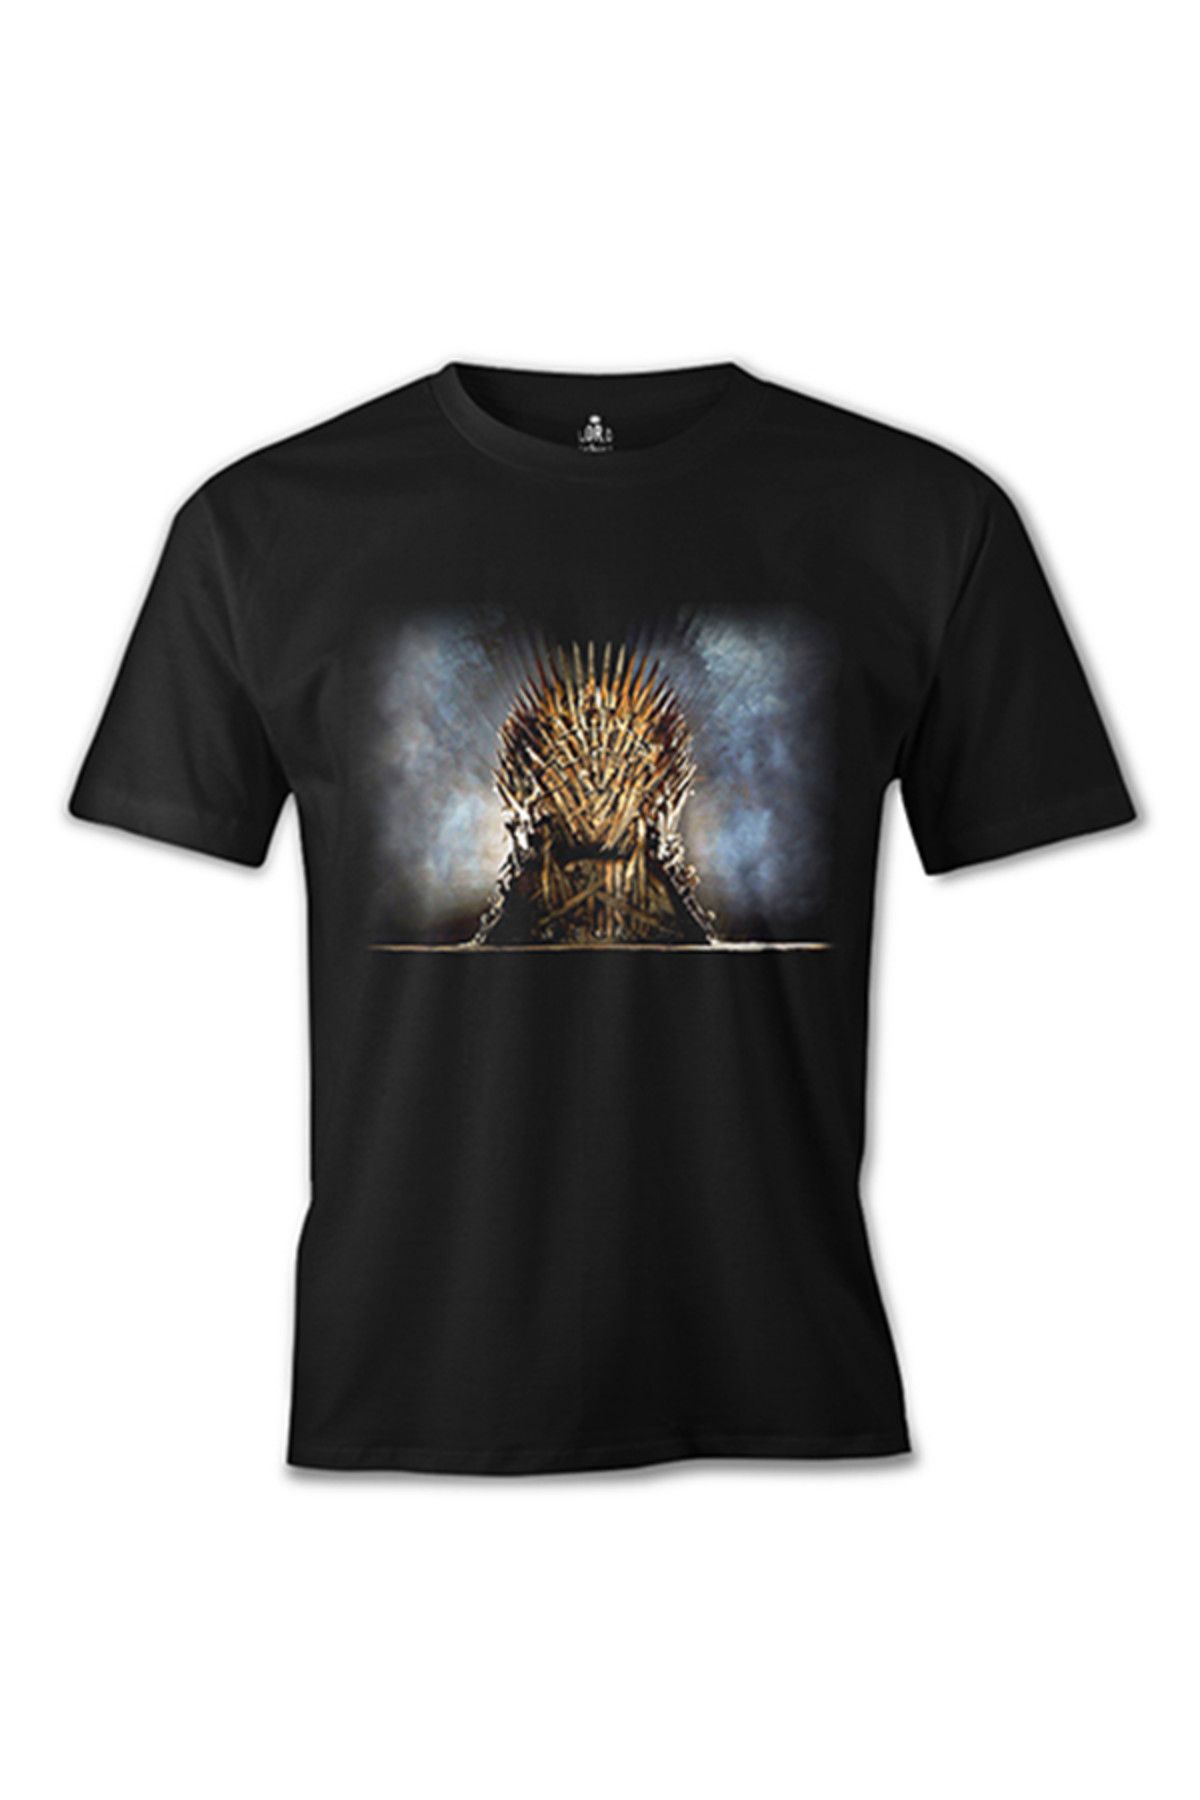 Lord T-Shirt Game of Thrones - Ice of Throne Siyah Erkek Tshirt - es-1087